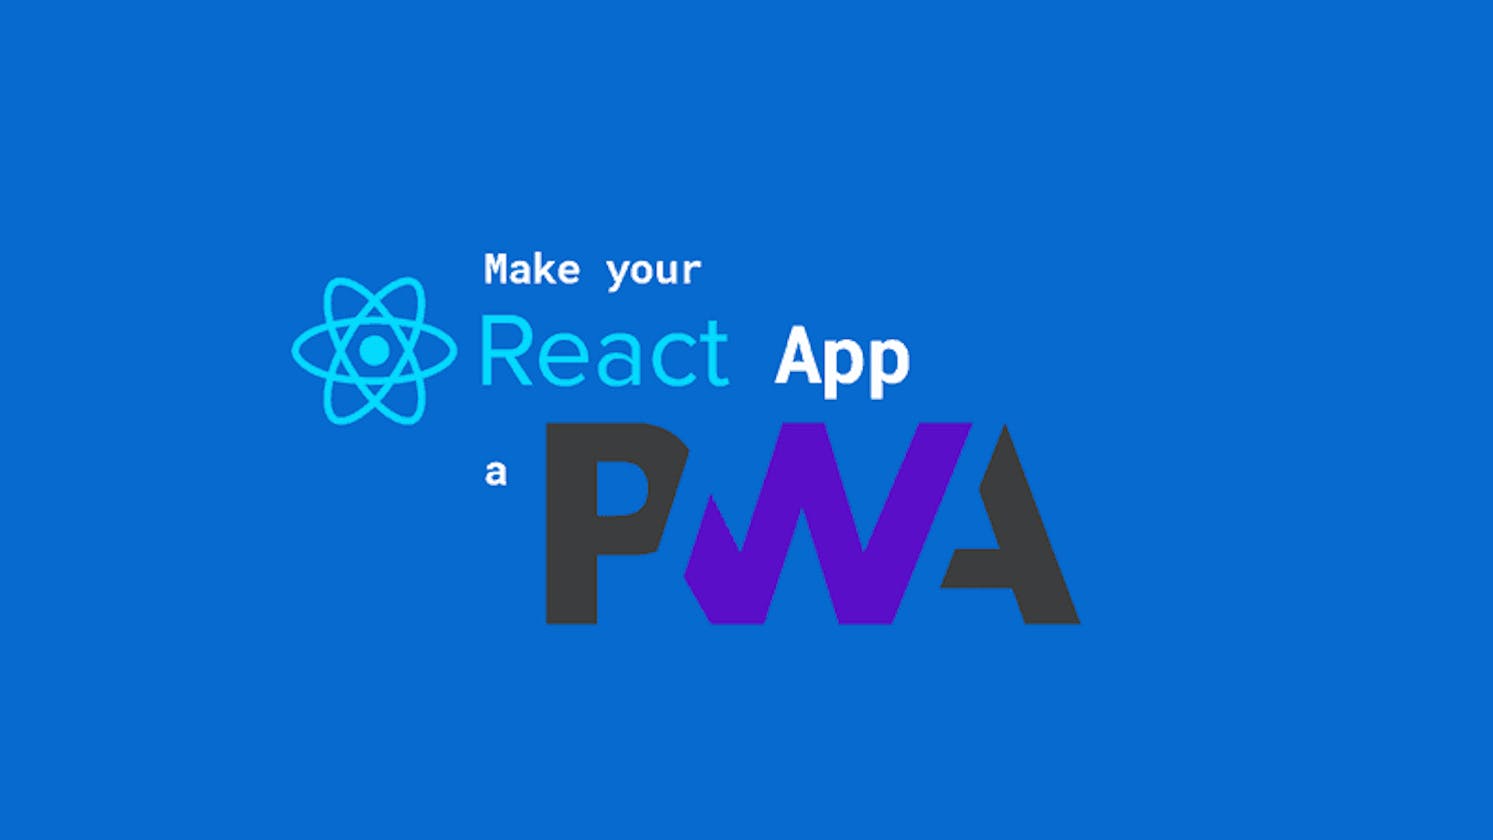 Convert existing React Web App to PWA